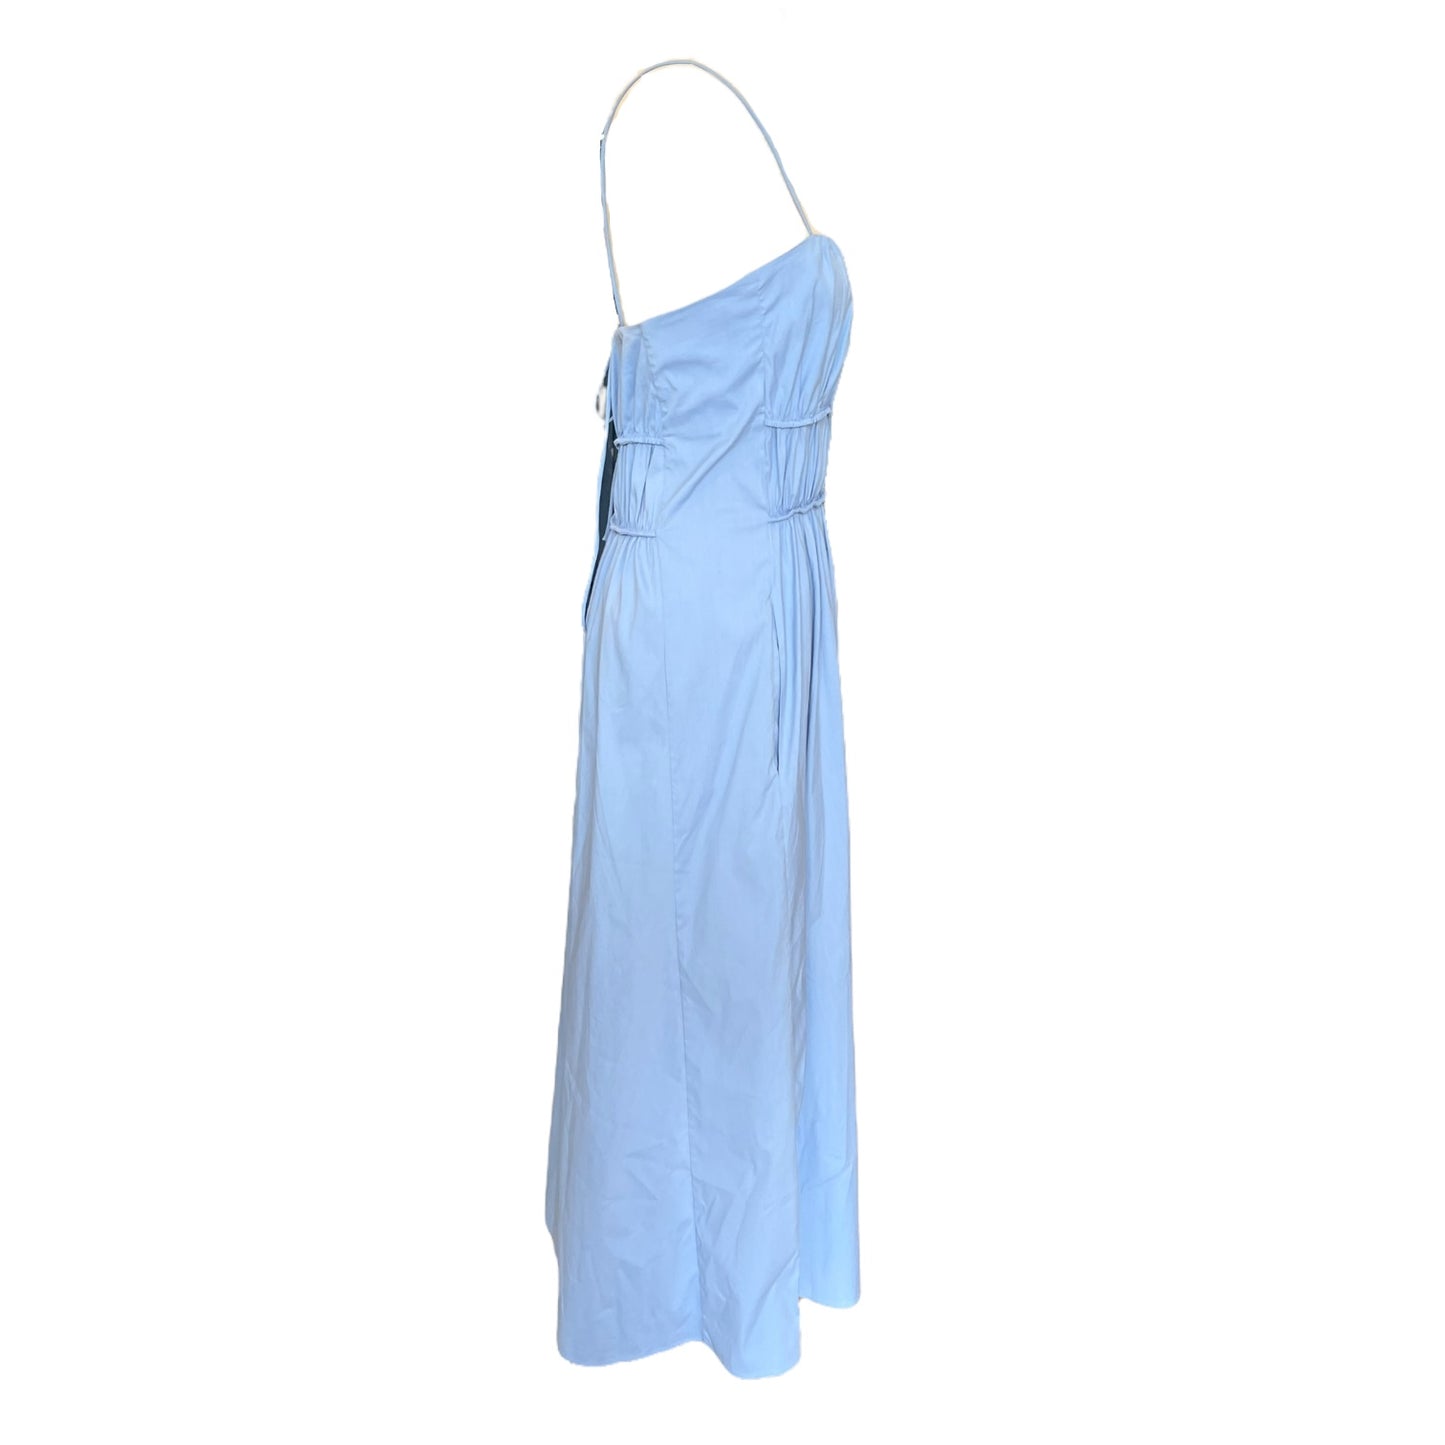 COS Light Blue Dress - 12 - NEW